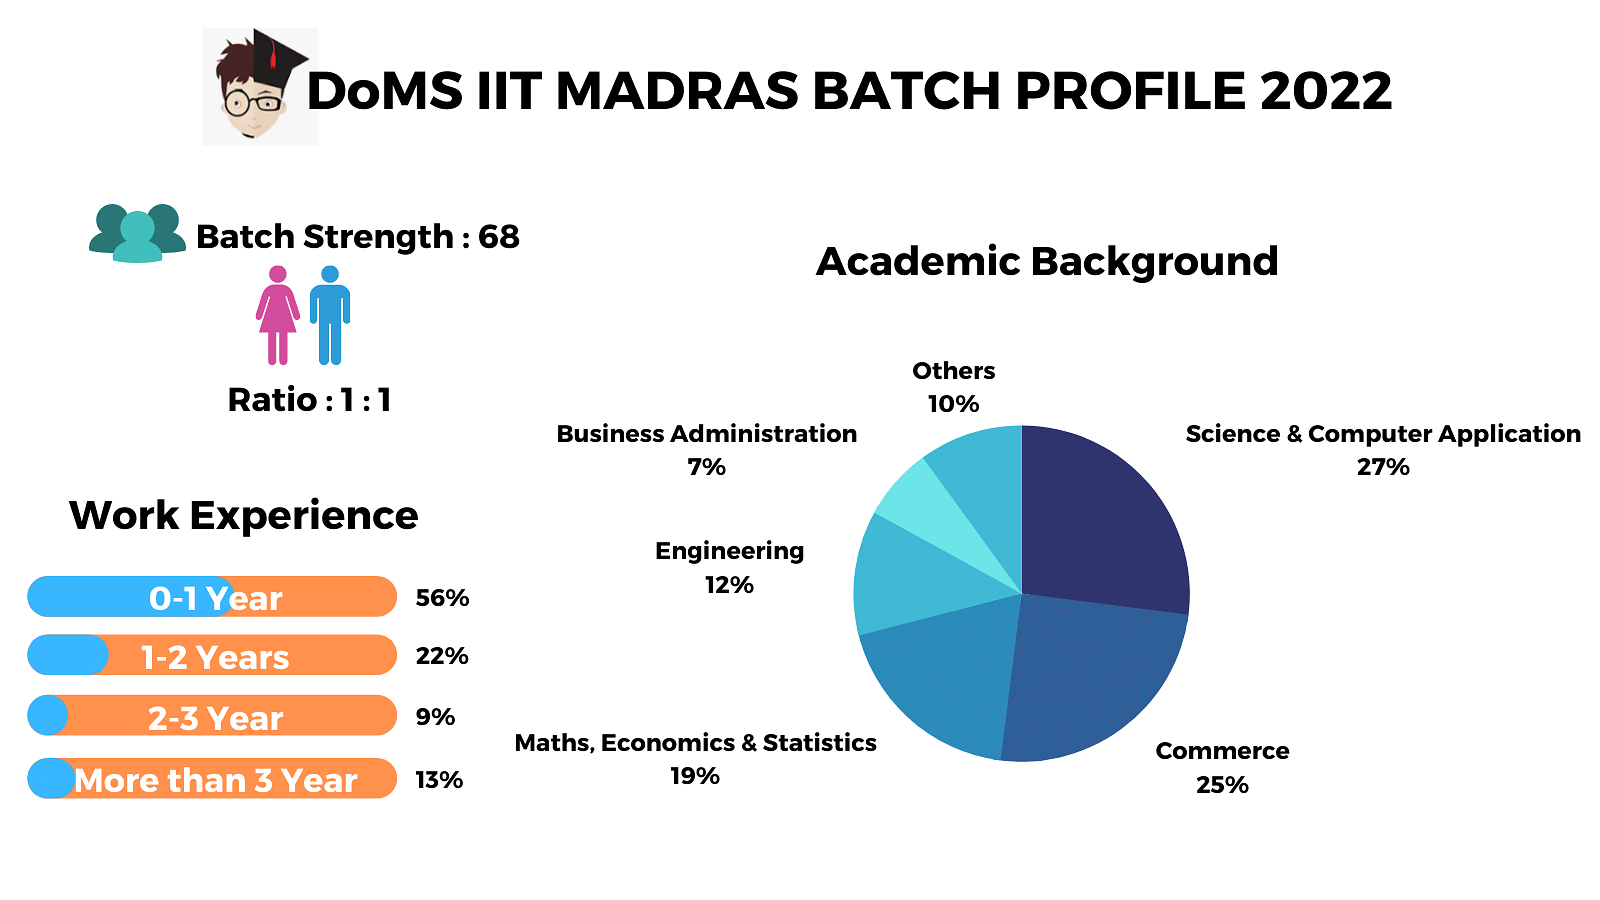 DOMS IIT Madras Batch Profile